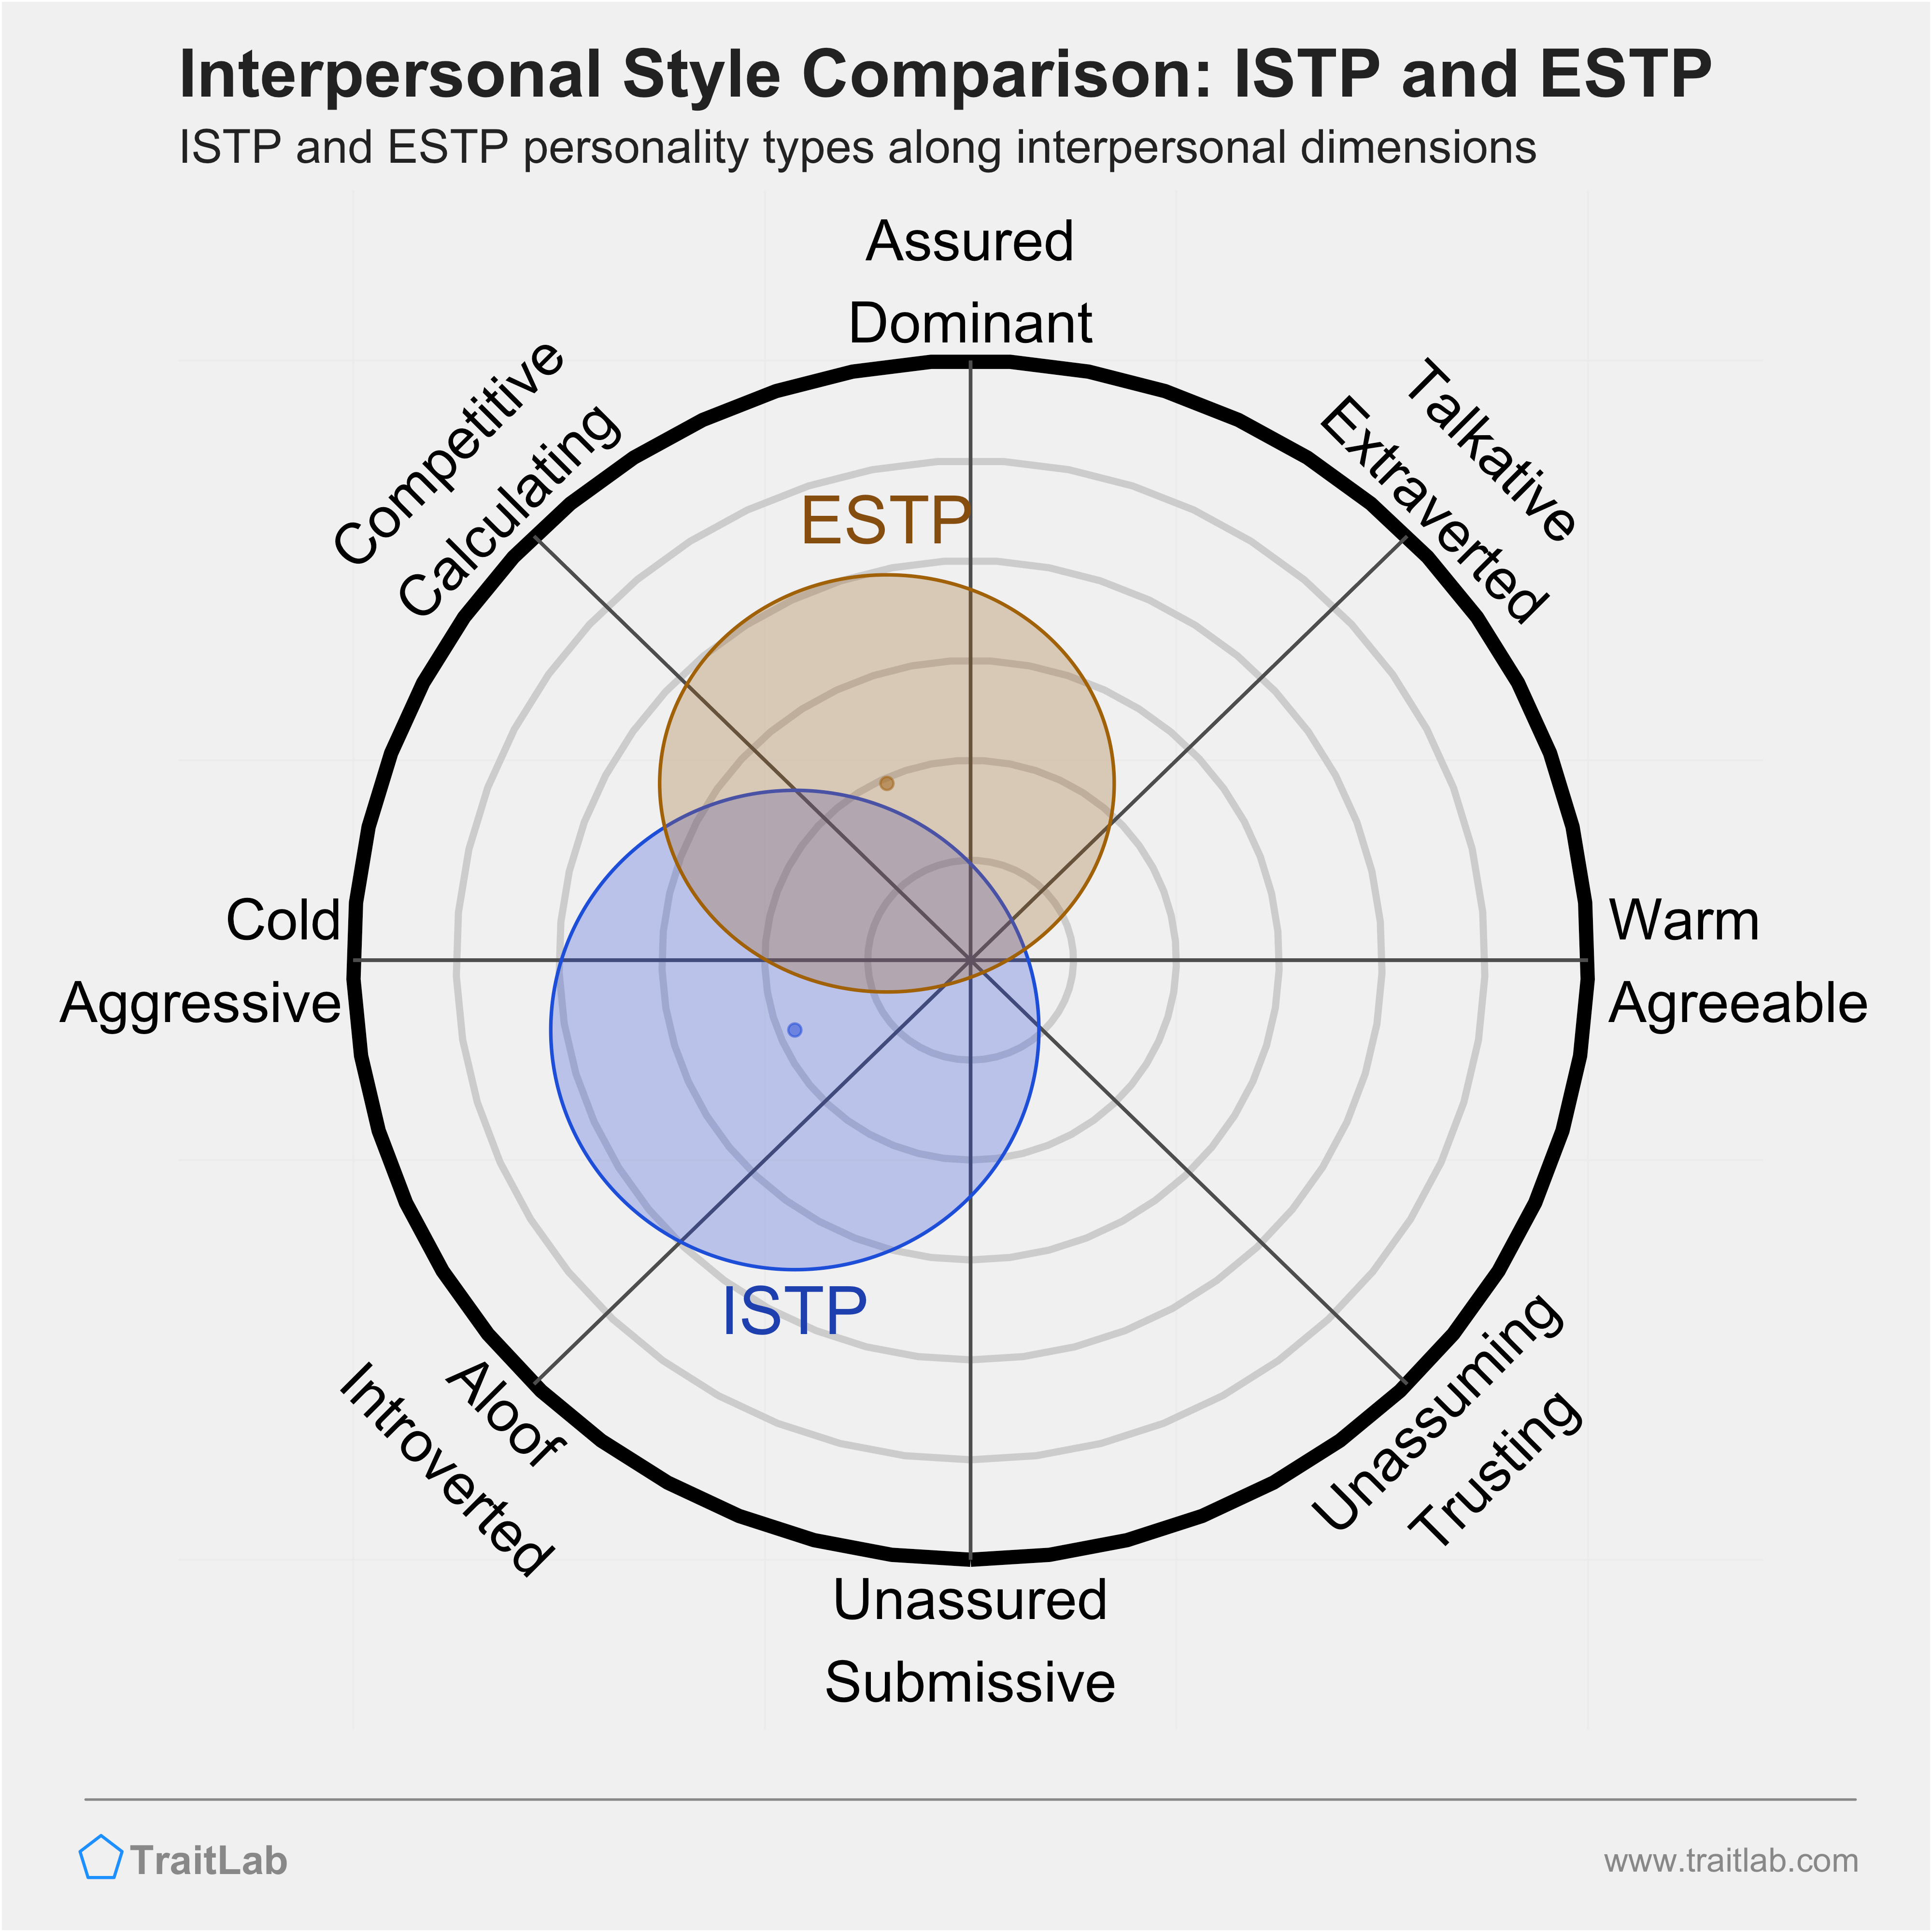 ISTP and ESTP comparison across interpersonal dimensions